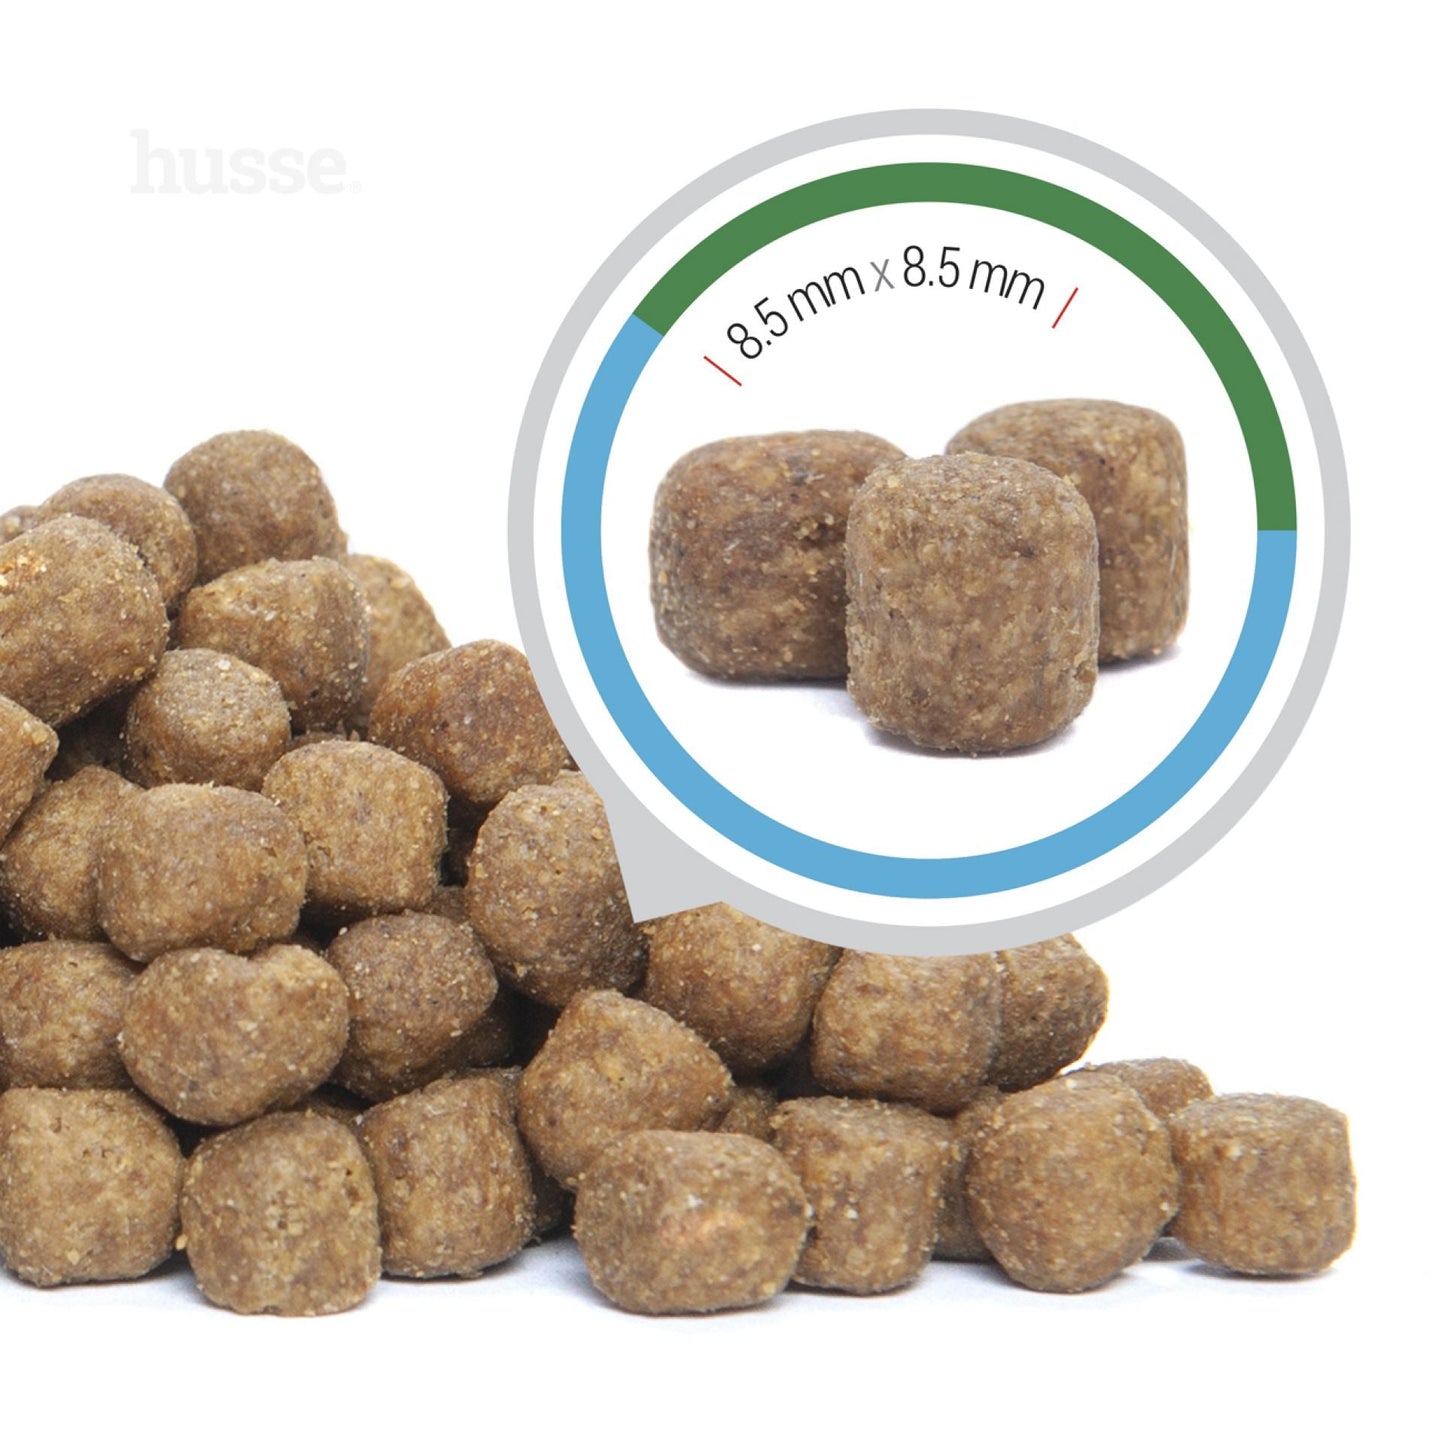 Optimal Mini | Gluten free dog dry food designed to meet high energy needs  (free sample - one pack per customer)